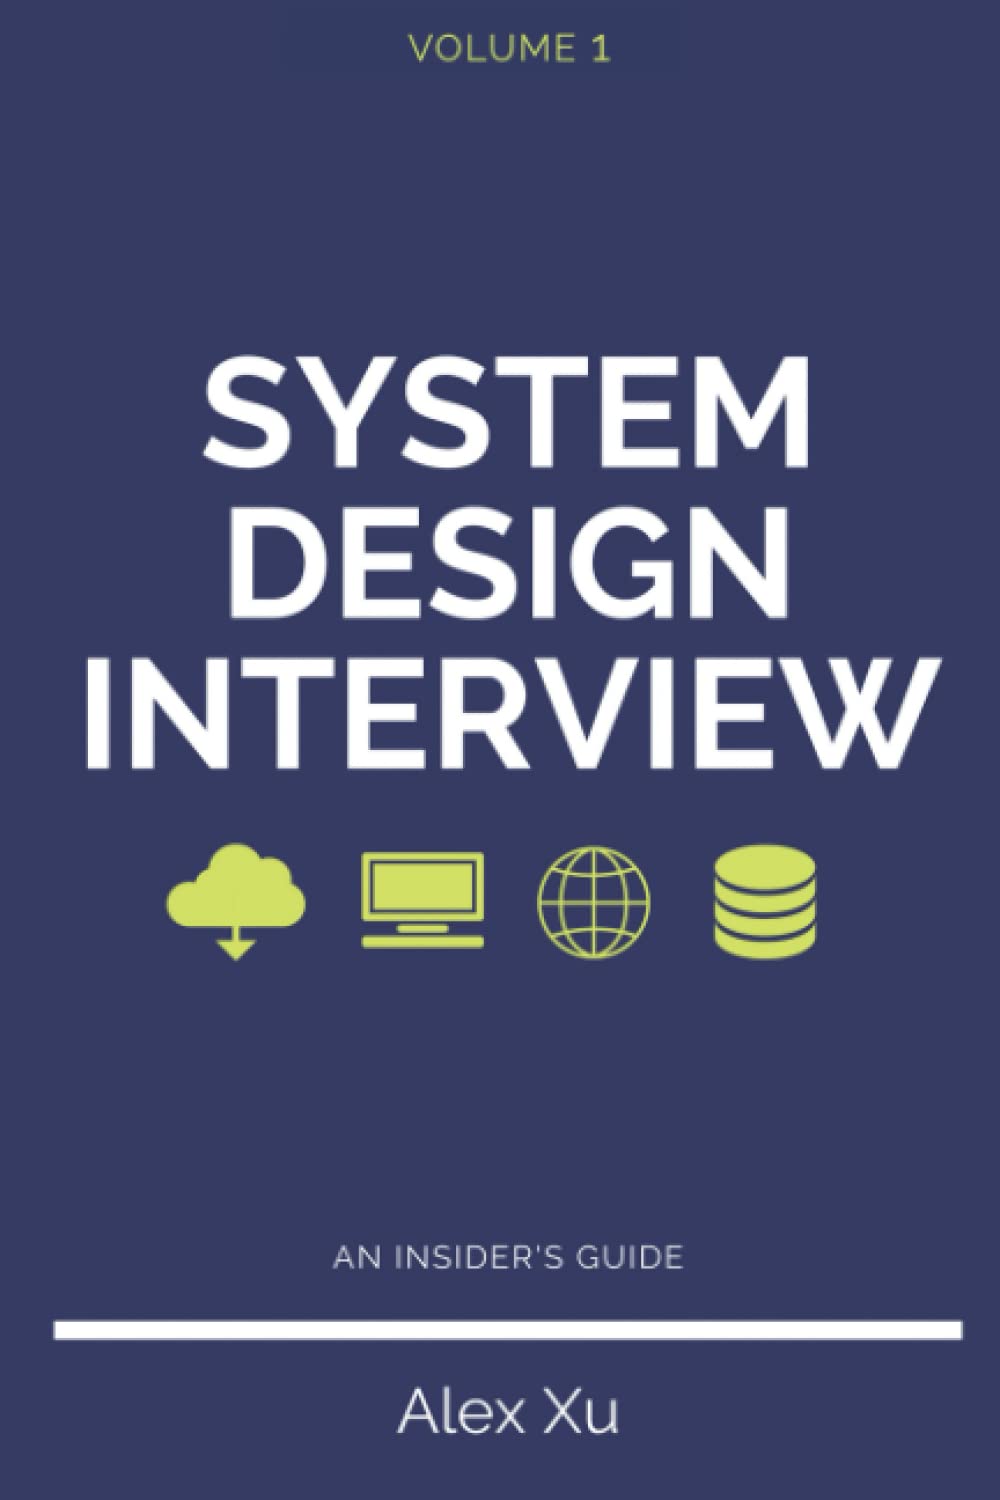 Book System Design Interview - An insider's guide, Second Edition Alex Xu